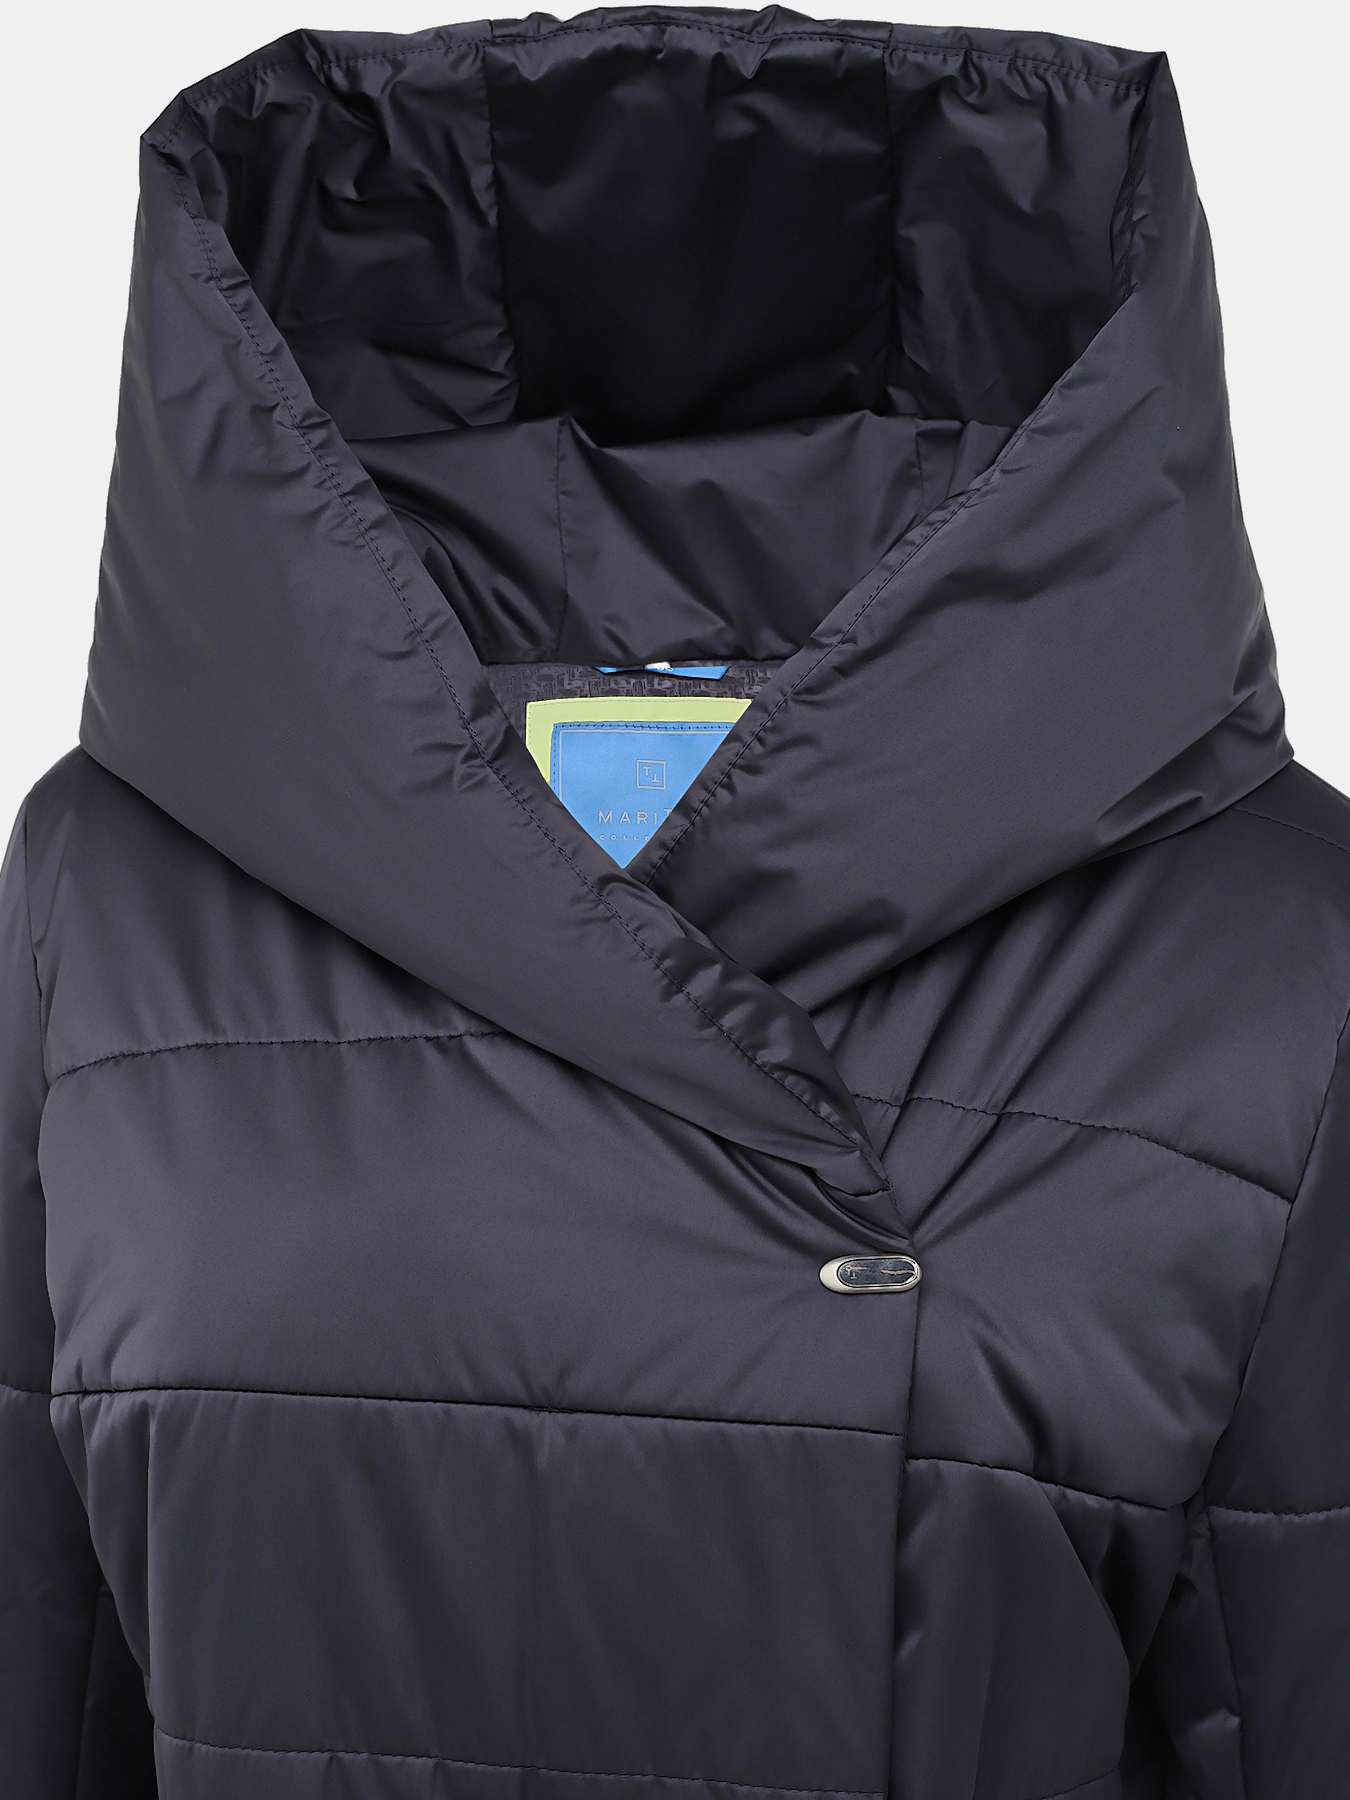 Пальто зимнее Maritta 433550-026, цвет темно-синий, размер 50 - фото 5